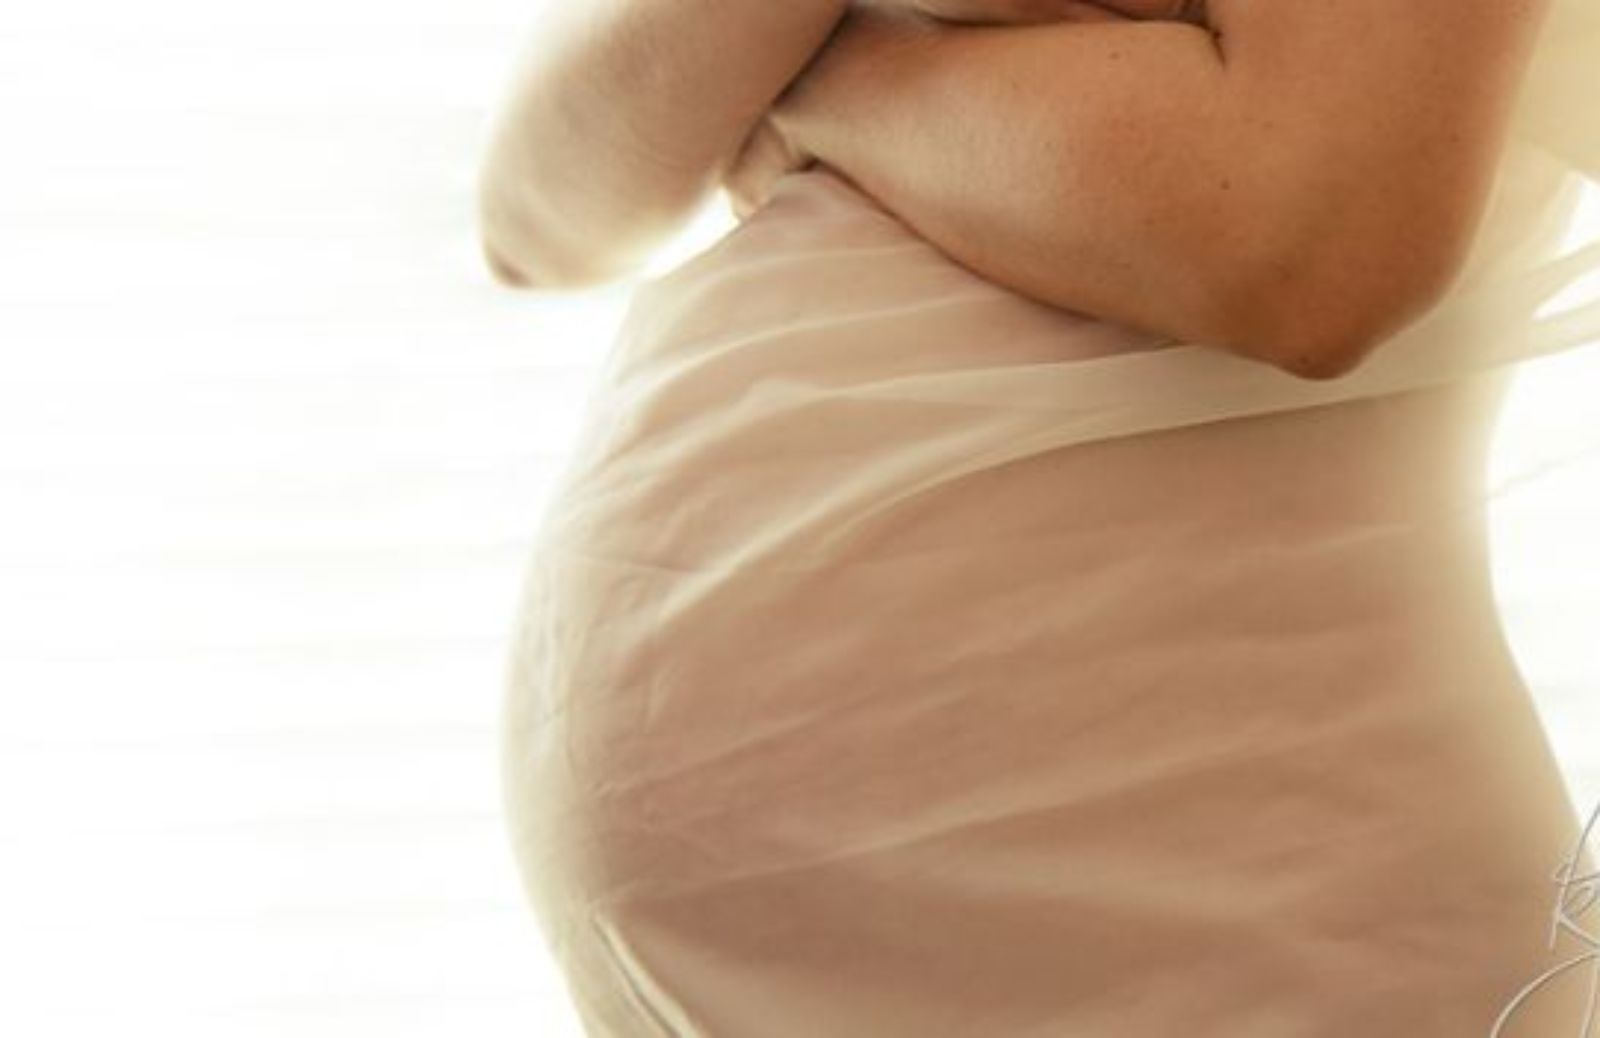 Acido folico: non solo gravidanza